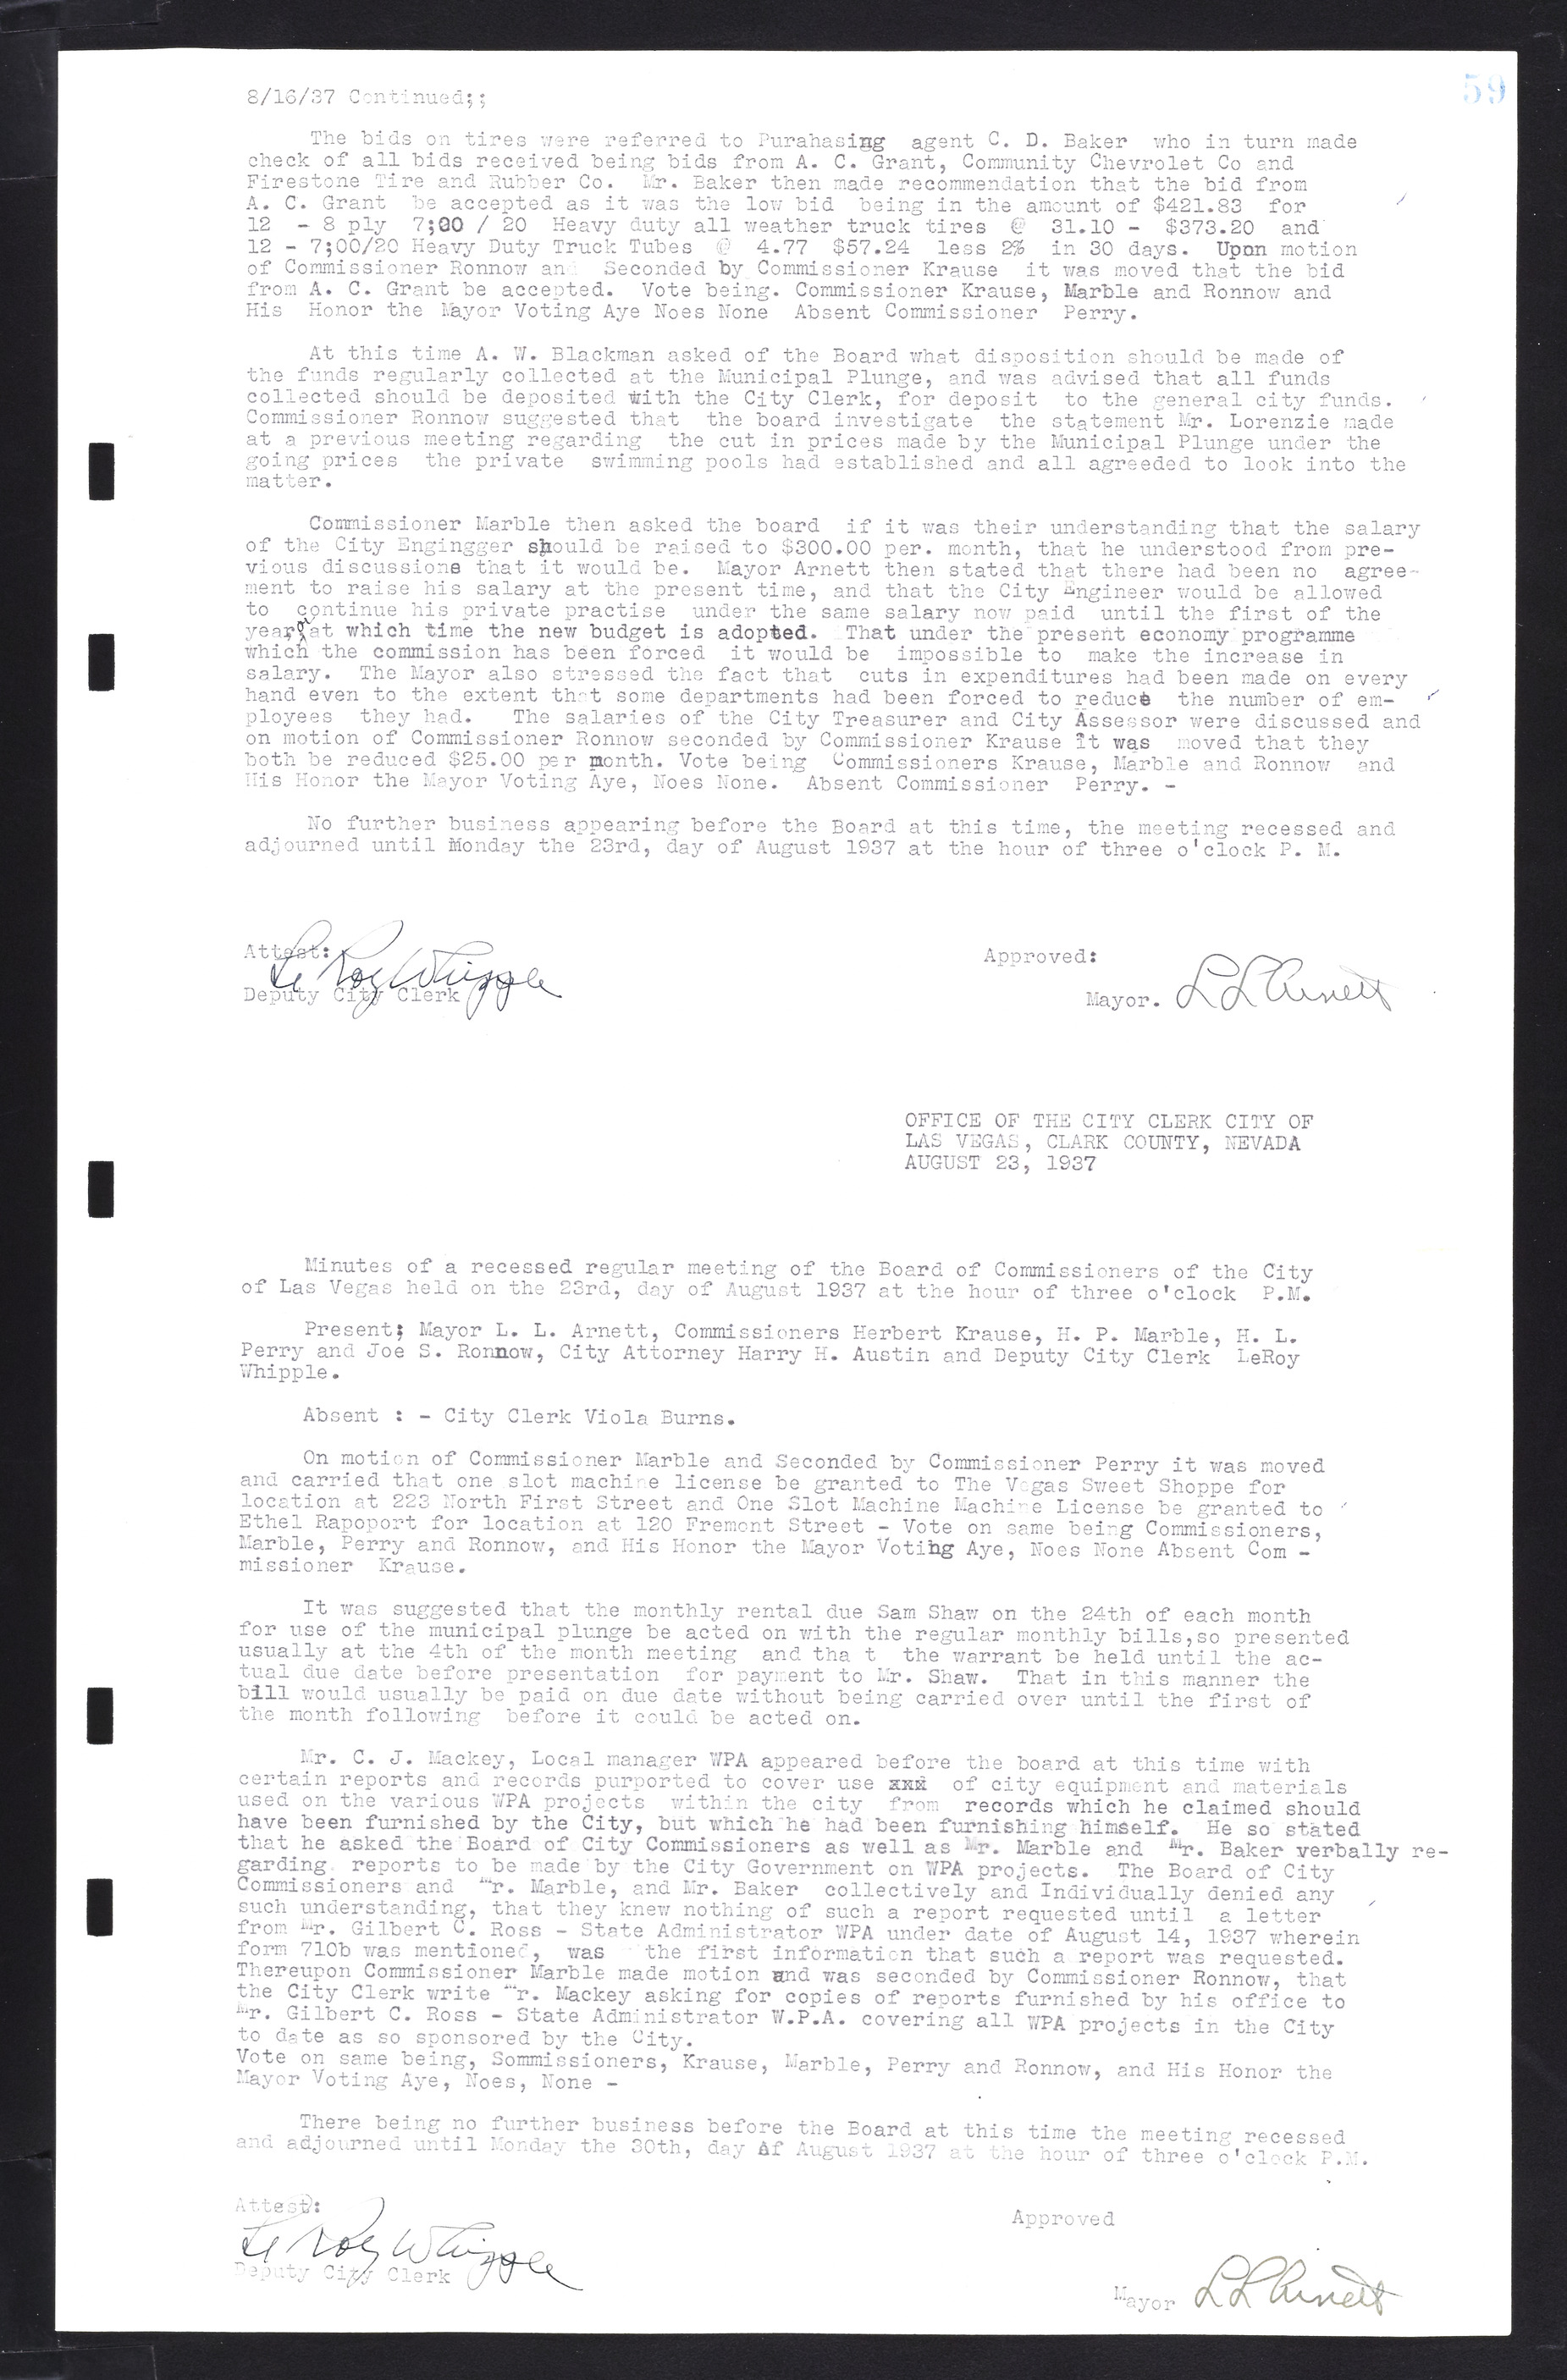 Las Vegas City Commission Minutes, February 17, 1937 to August 4, 1942, lvc000004-68